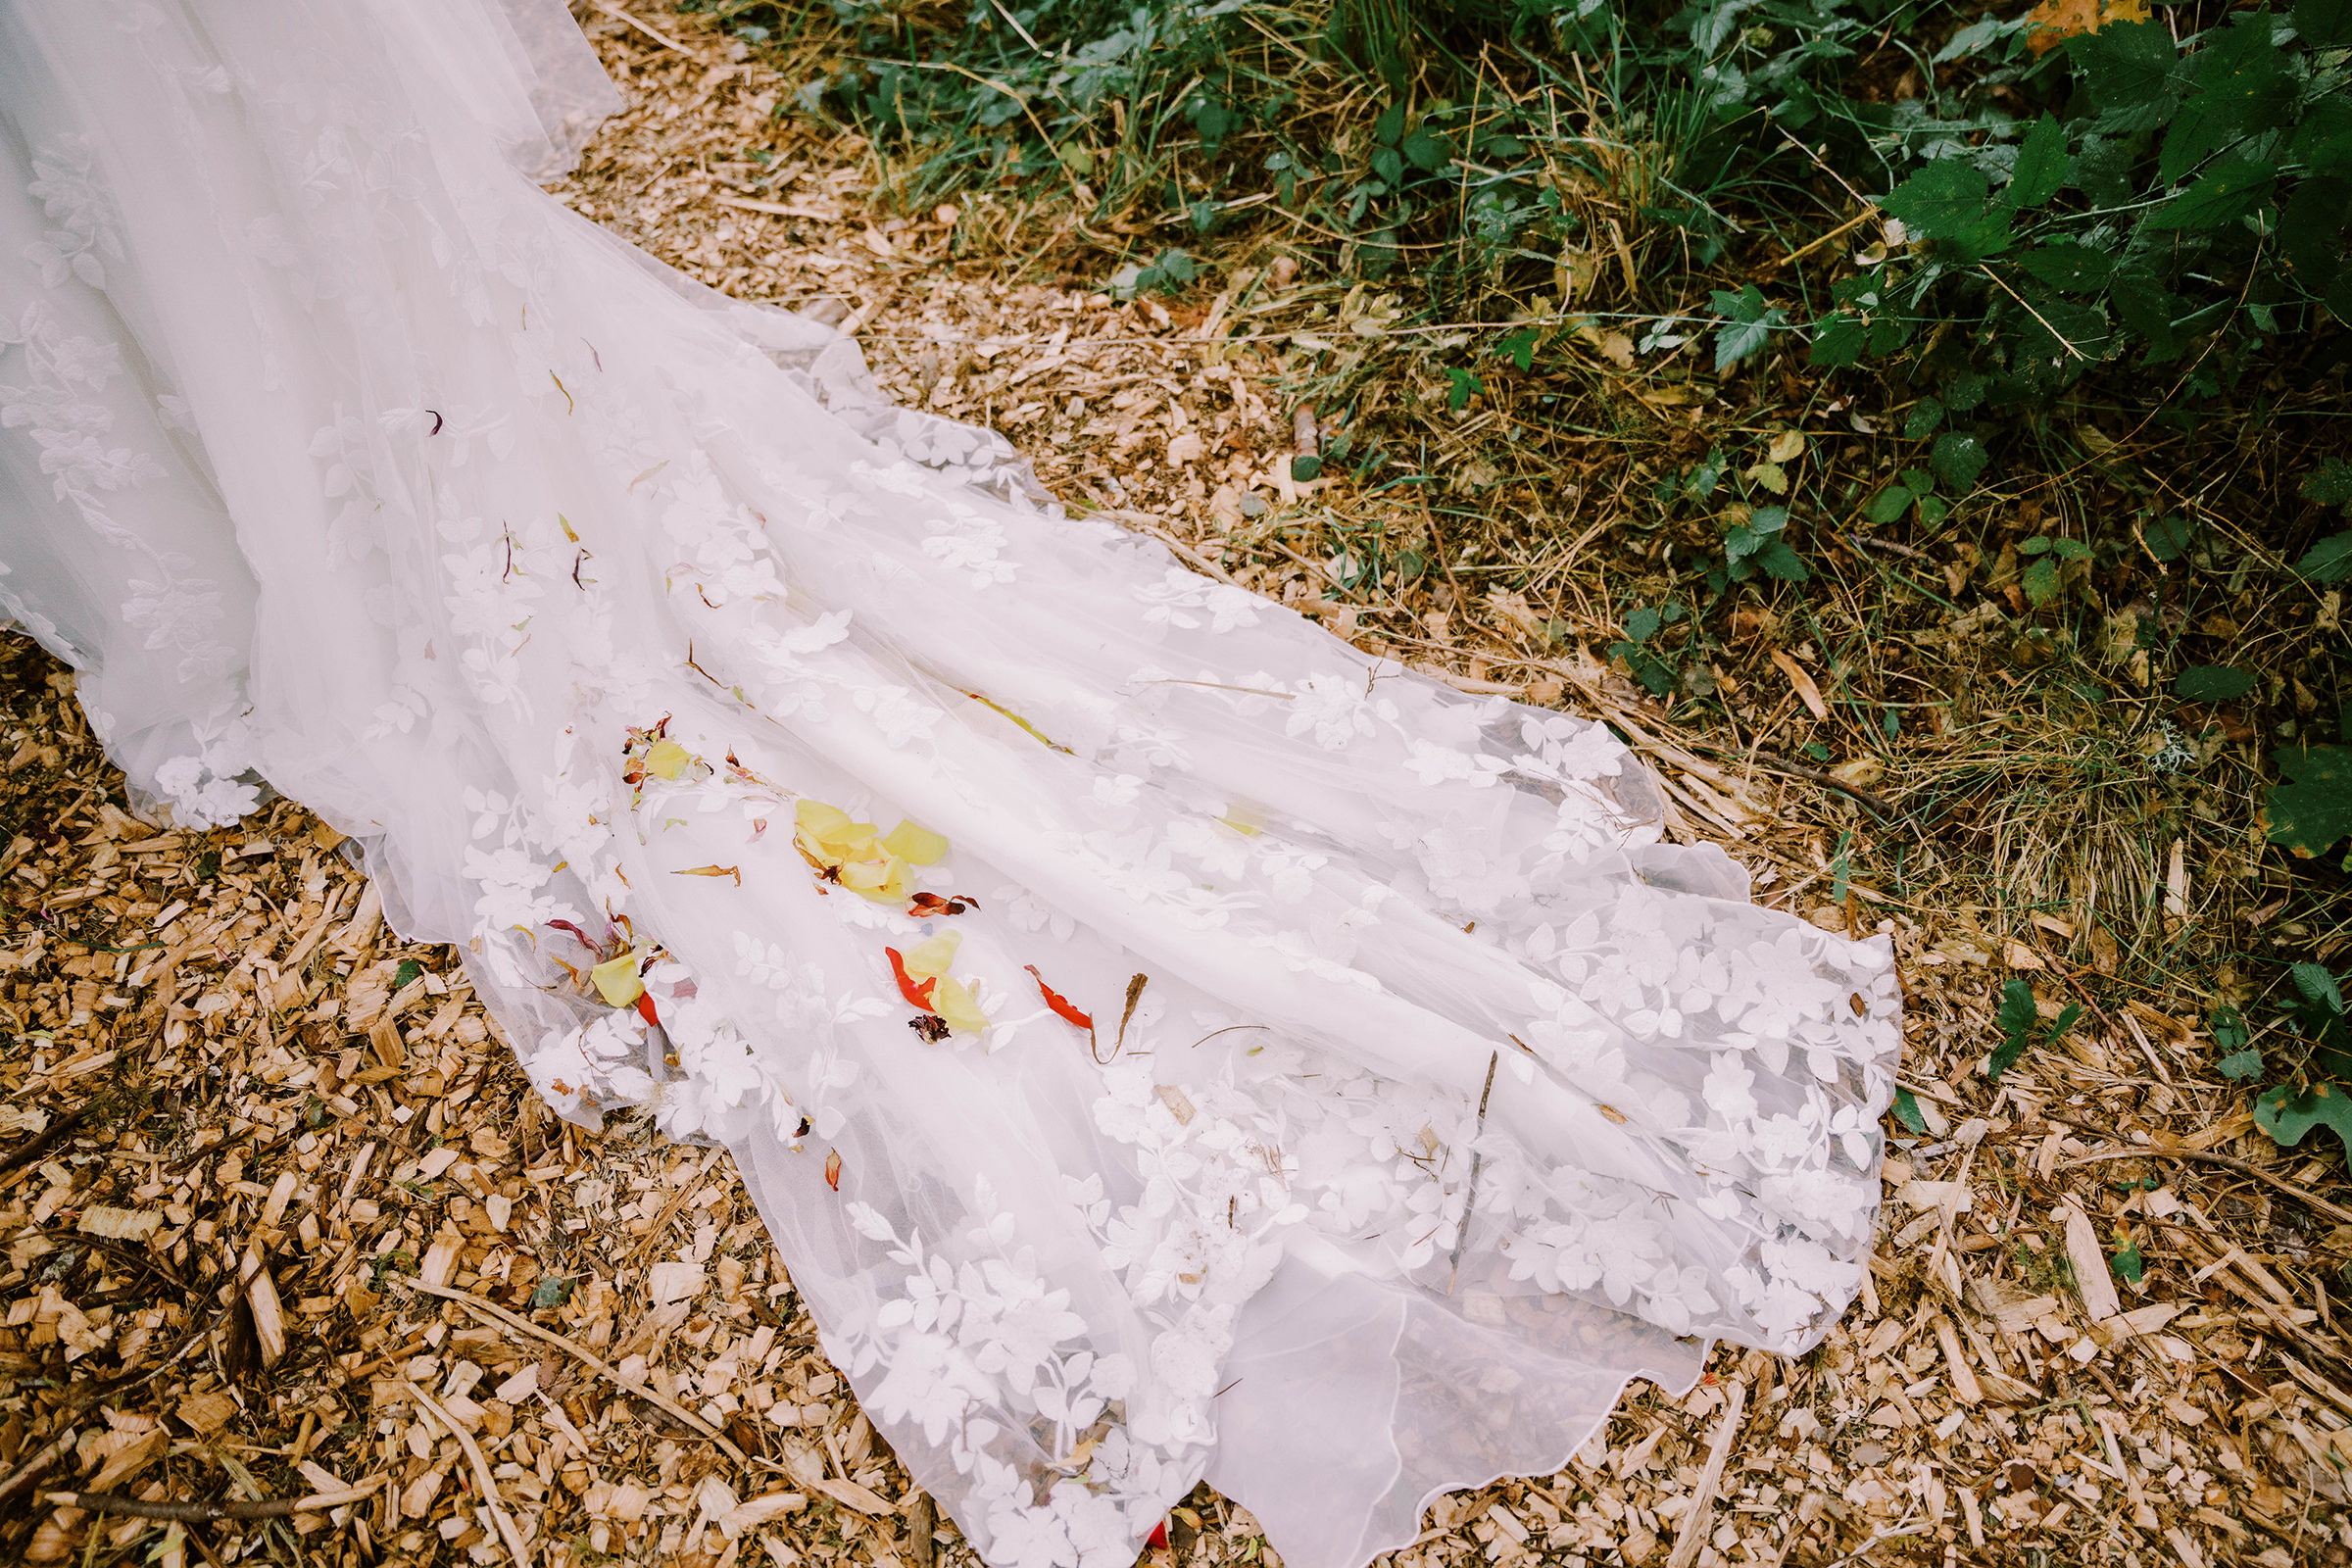 Annika's dress, filled with dried dahlia